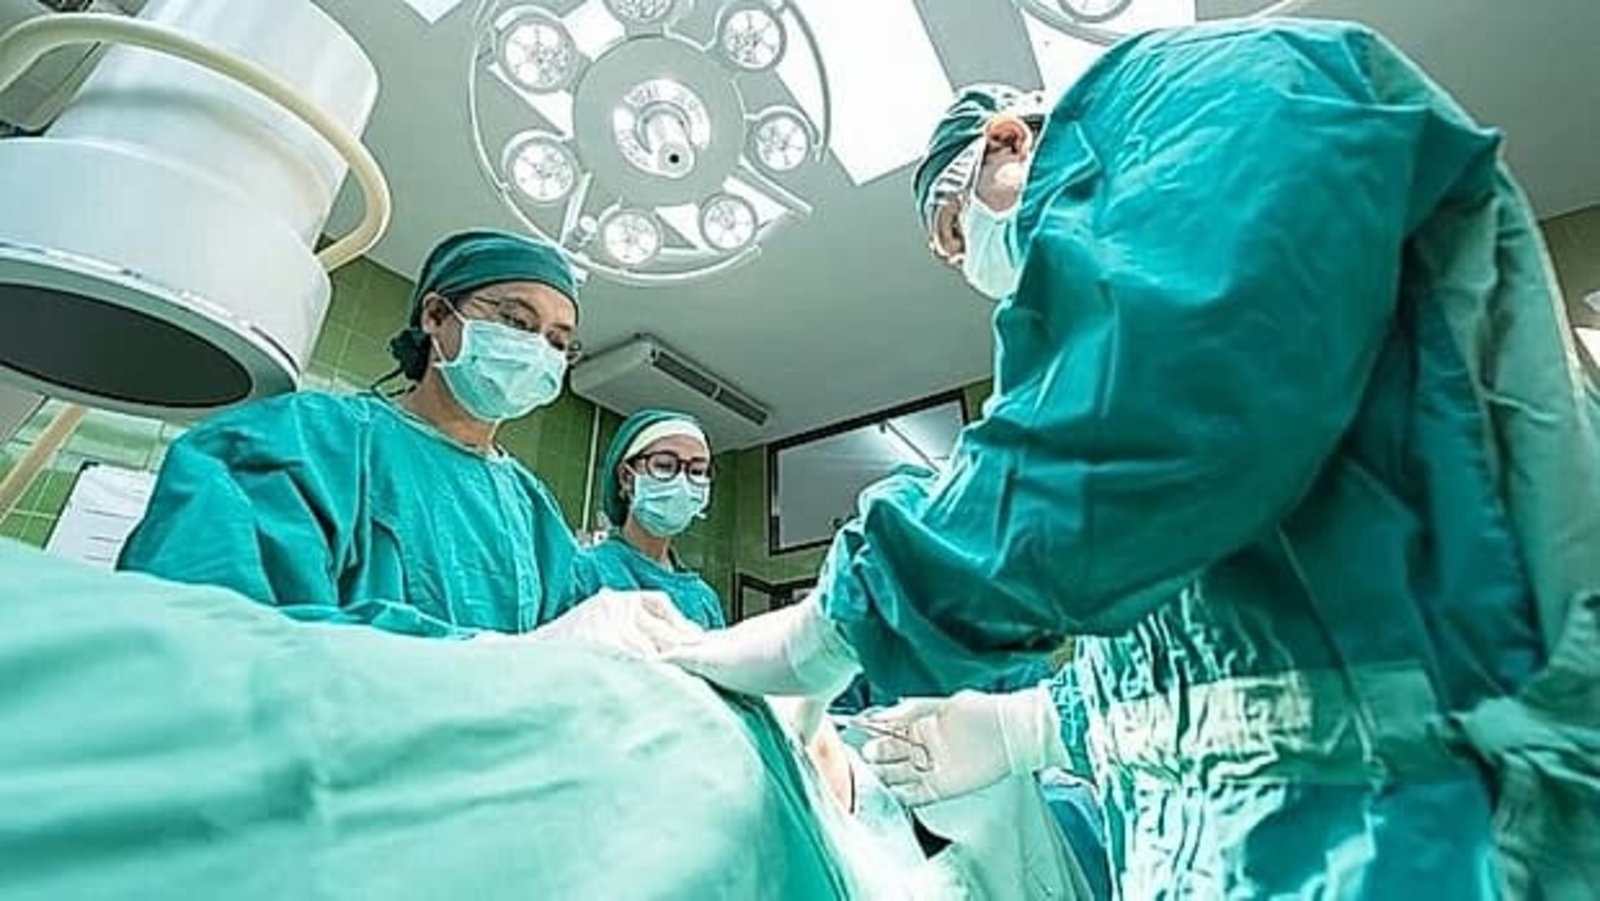 Башкирия: хирурги кардиоцентра провели редкую операцию